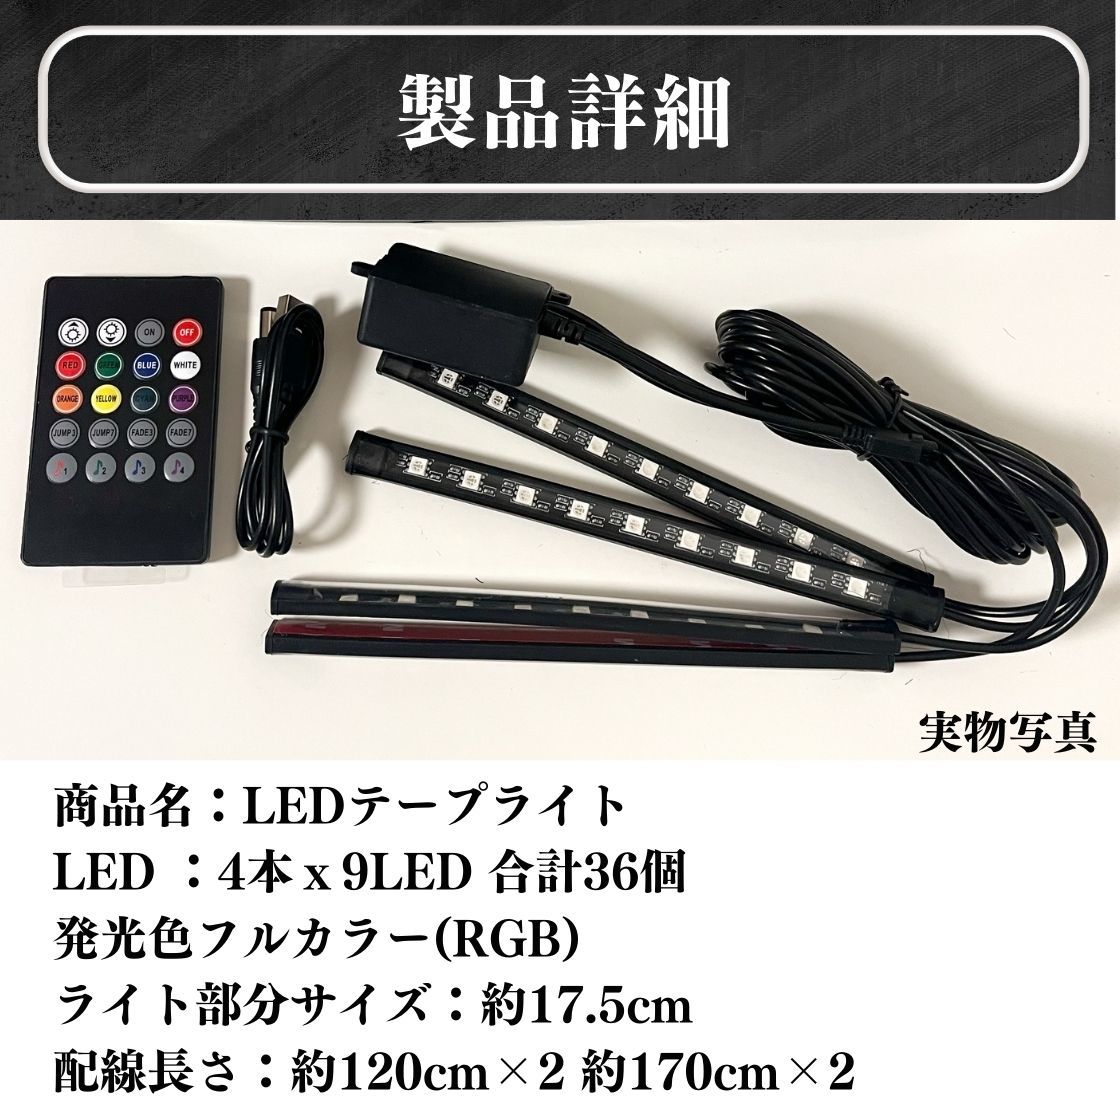 LED テープライト USB 車内 装飾 照明 車内アクセサリー 間接照明 車 リモコン 防水 音楽 白 黄色 フットライト デスク インテリア シール_画像9